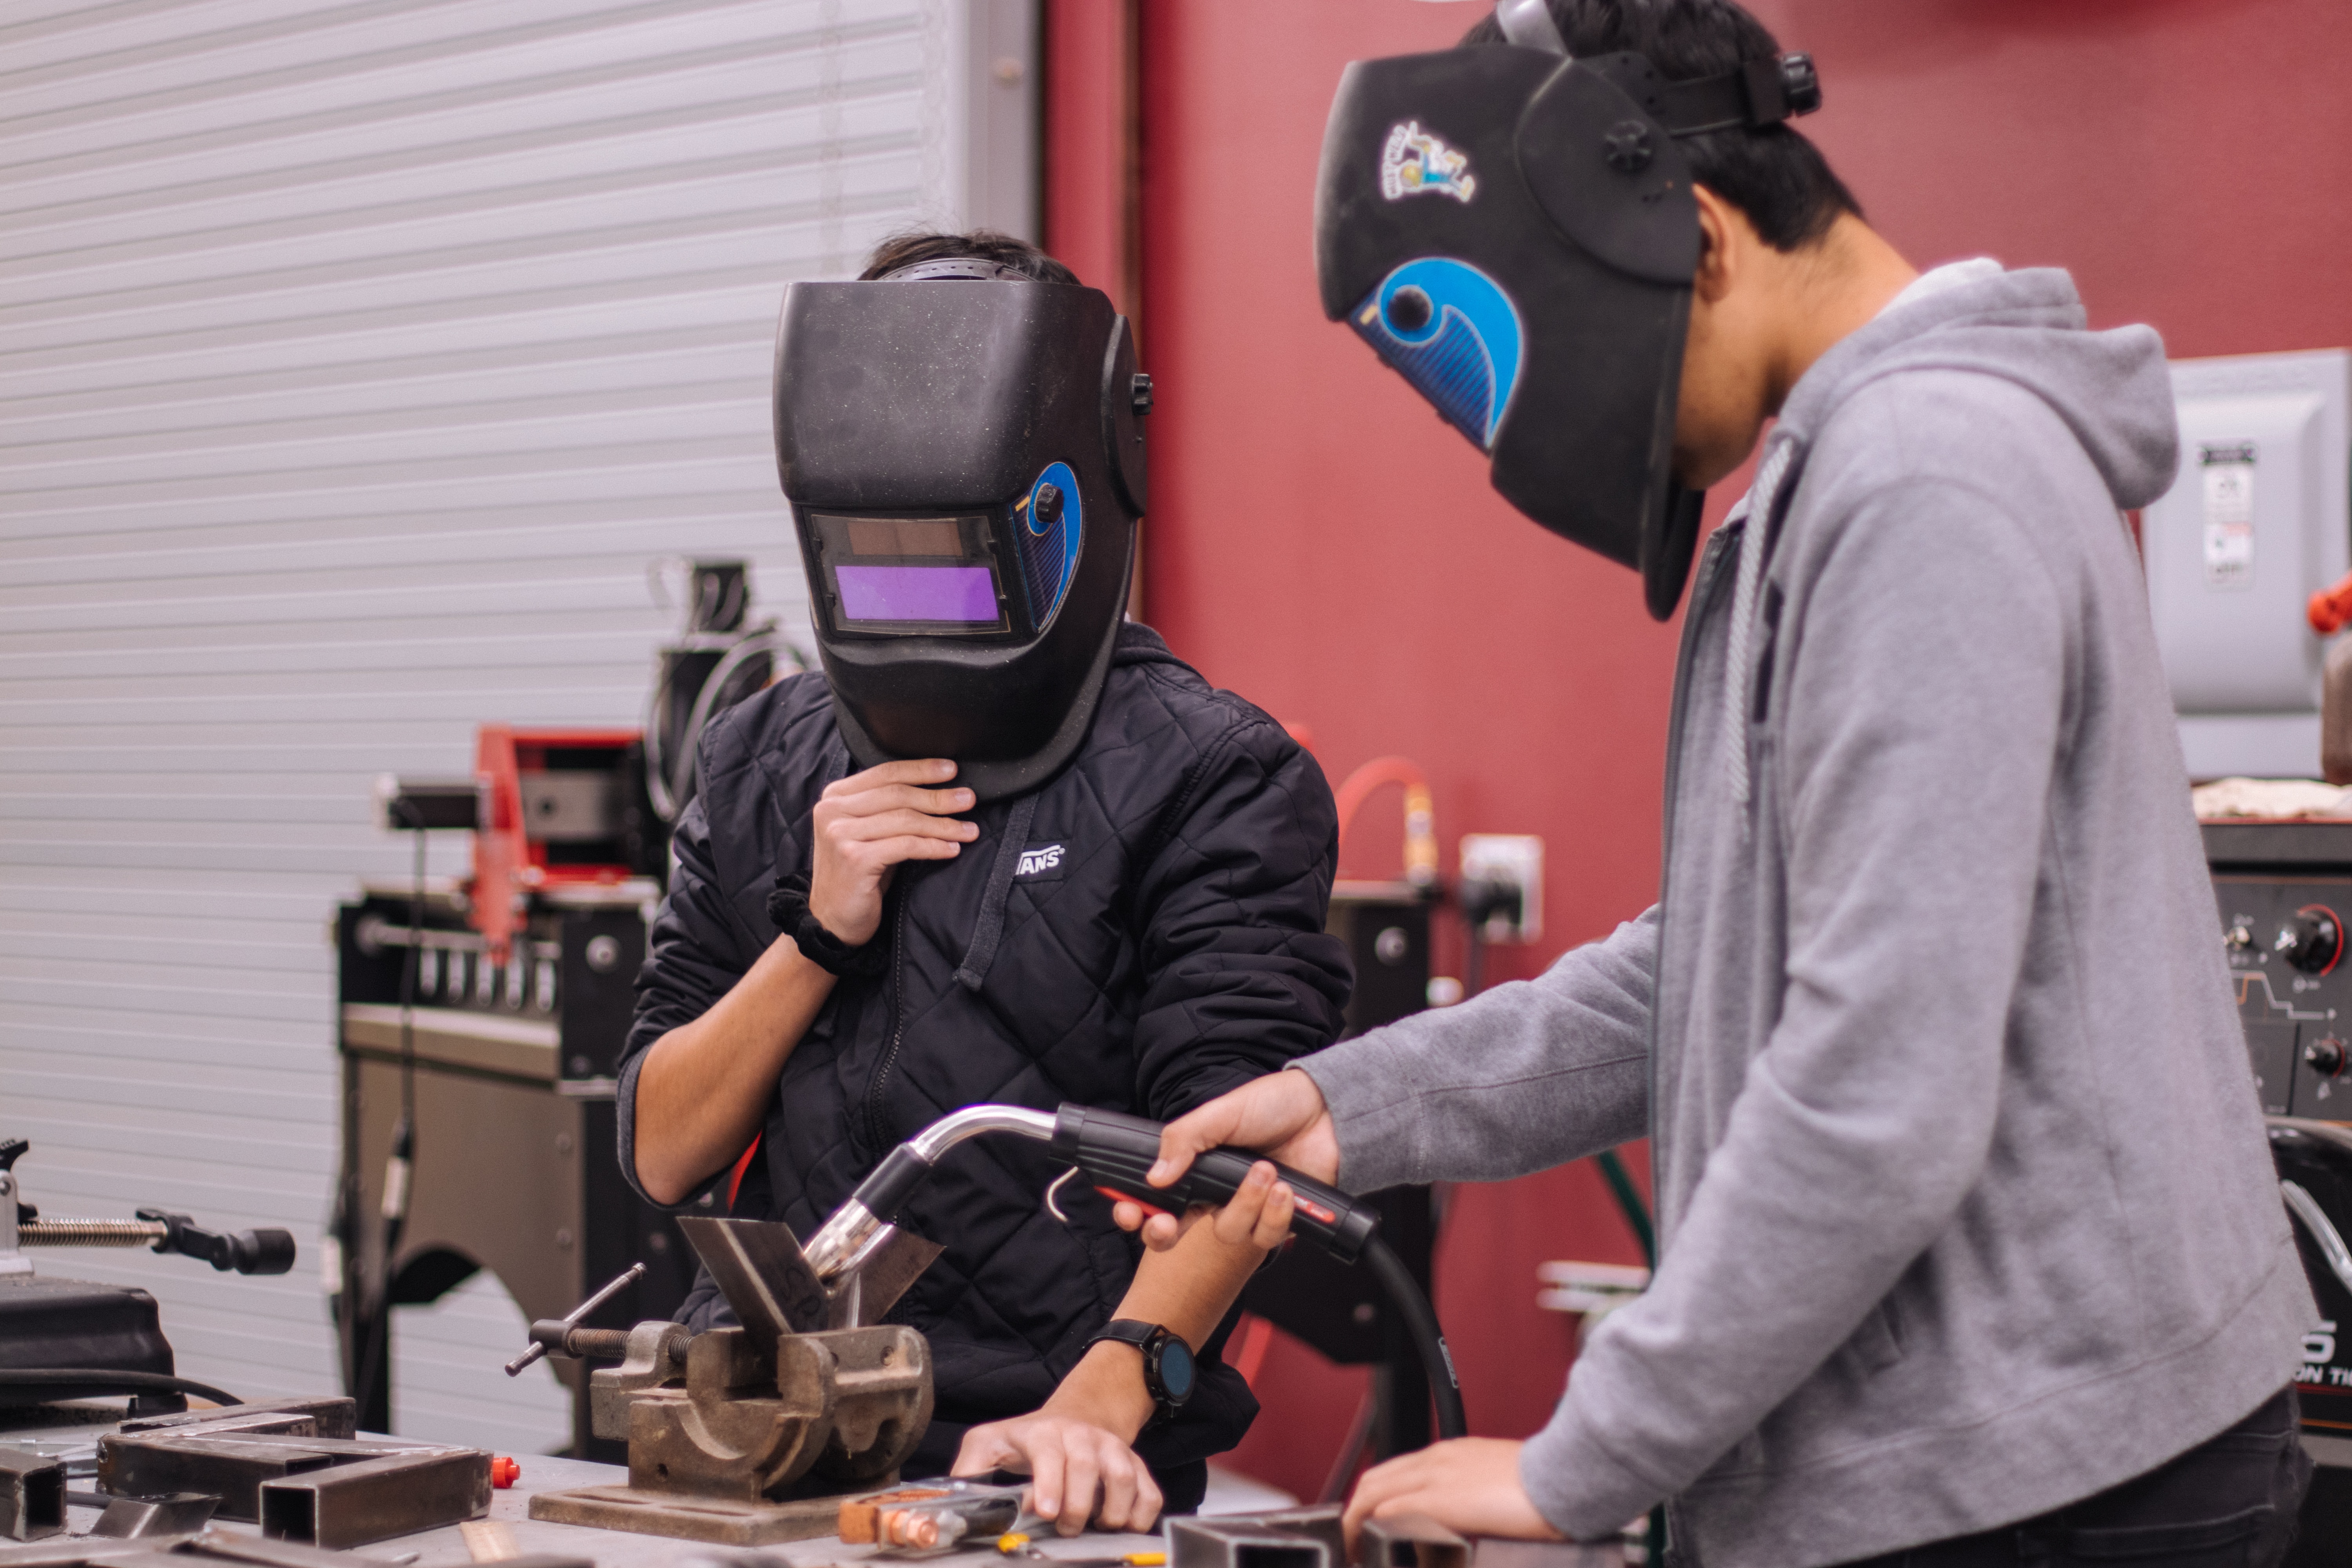 Two kids in welding masks holding a welding gun over a piece of metal